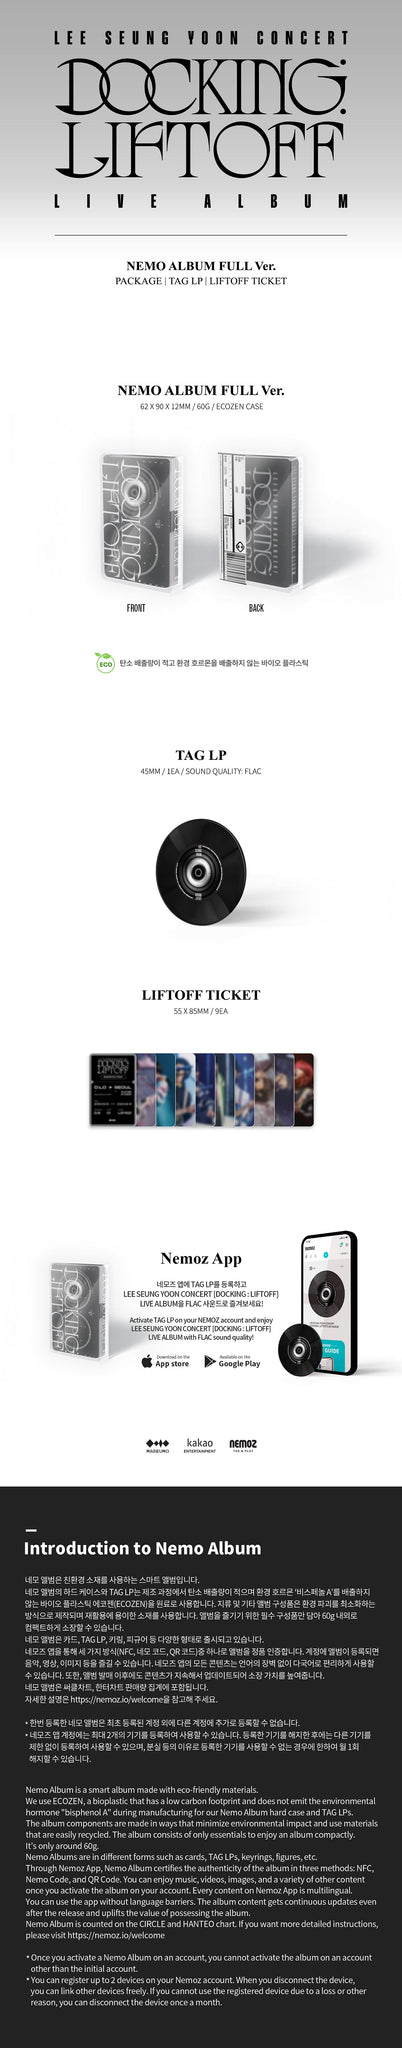 LEE SEUNG YOON - DOCKING : LIFTOFF (NEMO Album Fulll ver.)